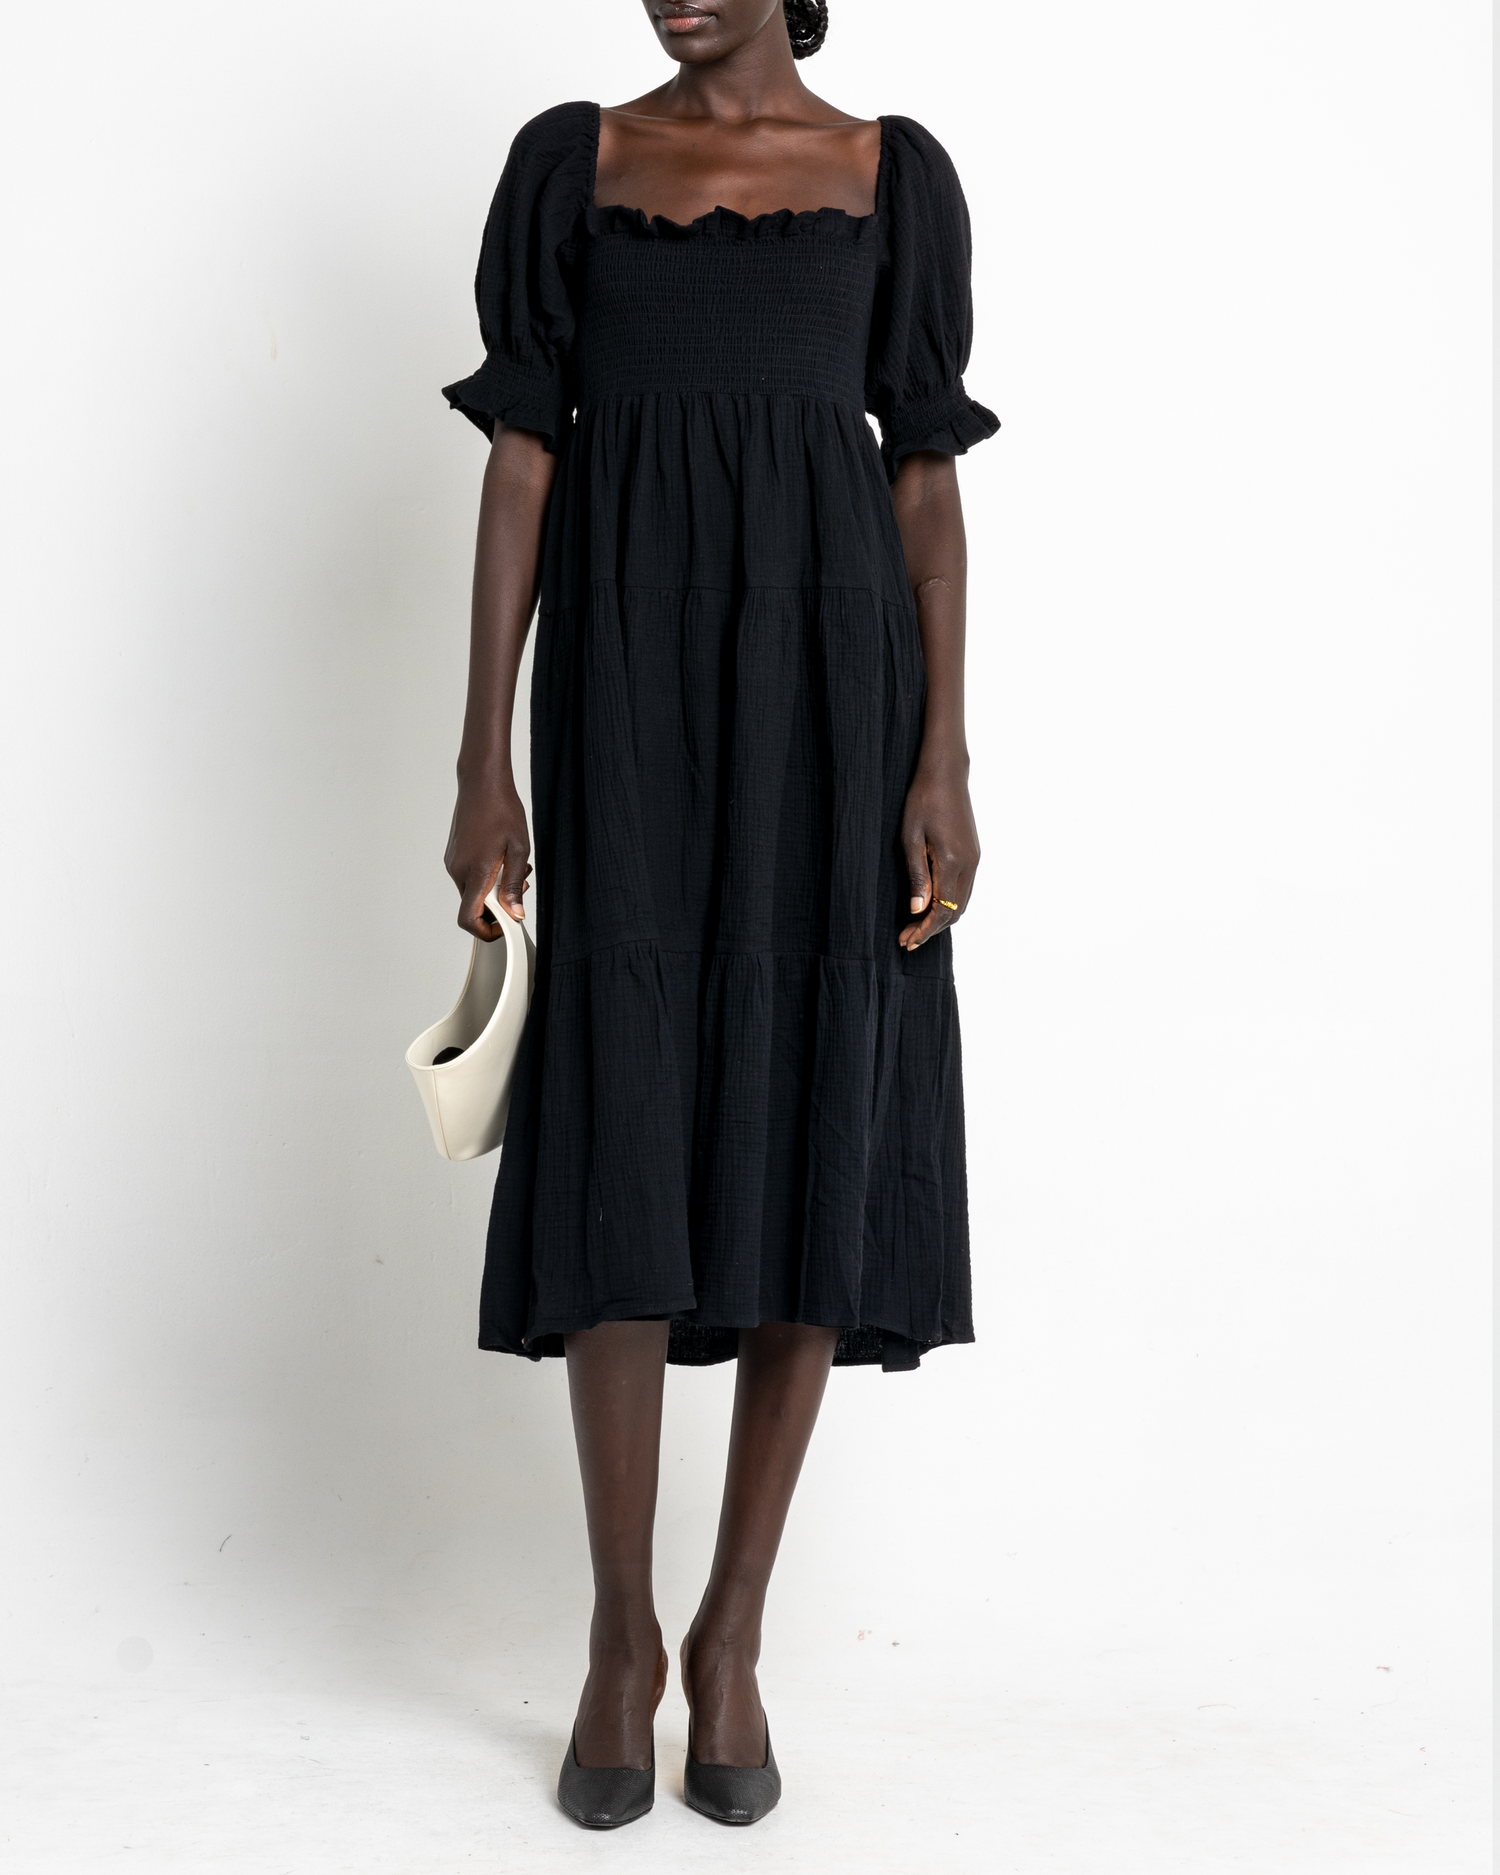 Third image of Frankie Dress, a black midi dress, puff sleeves, short sleeves